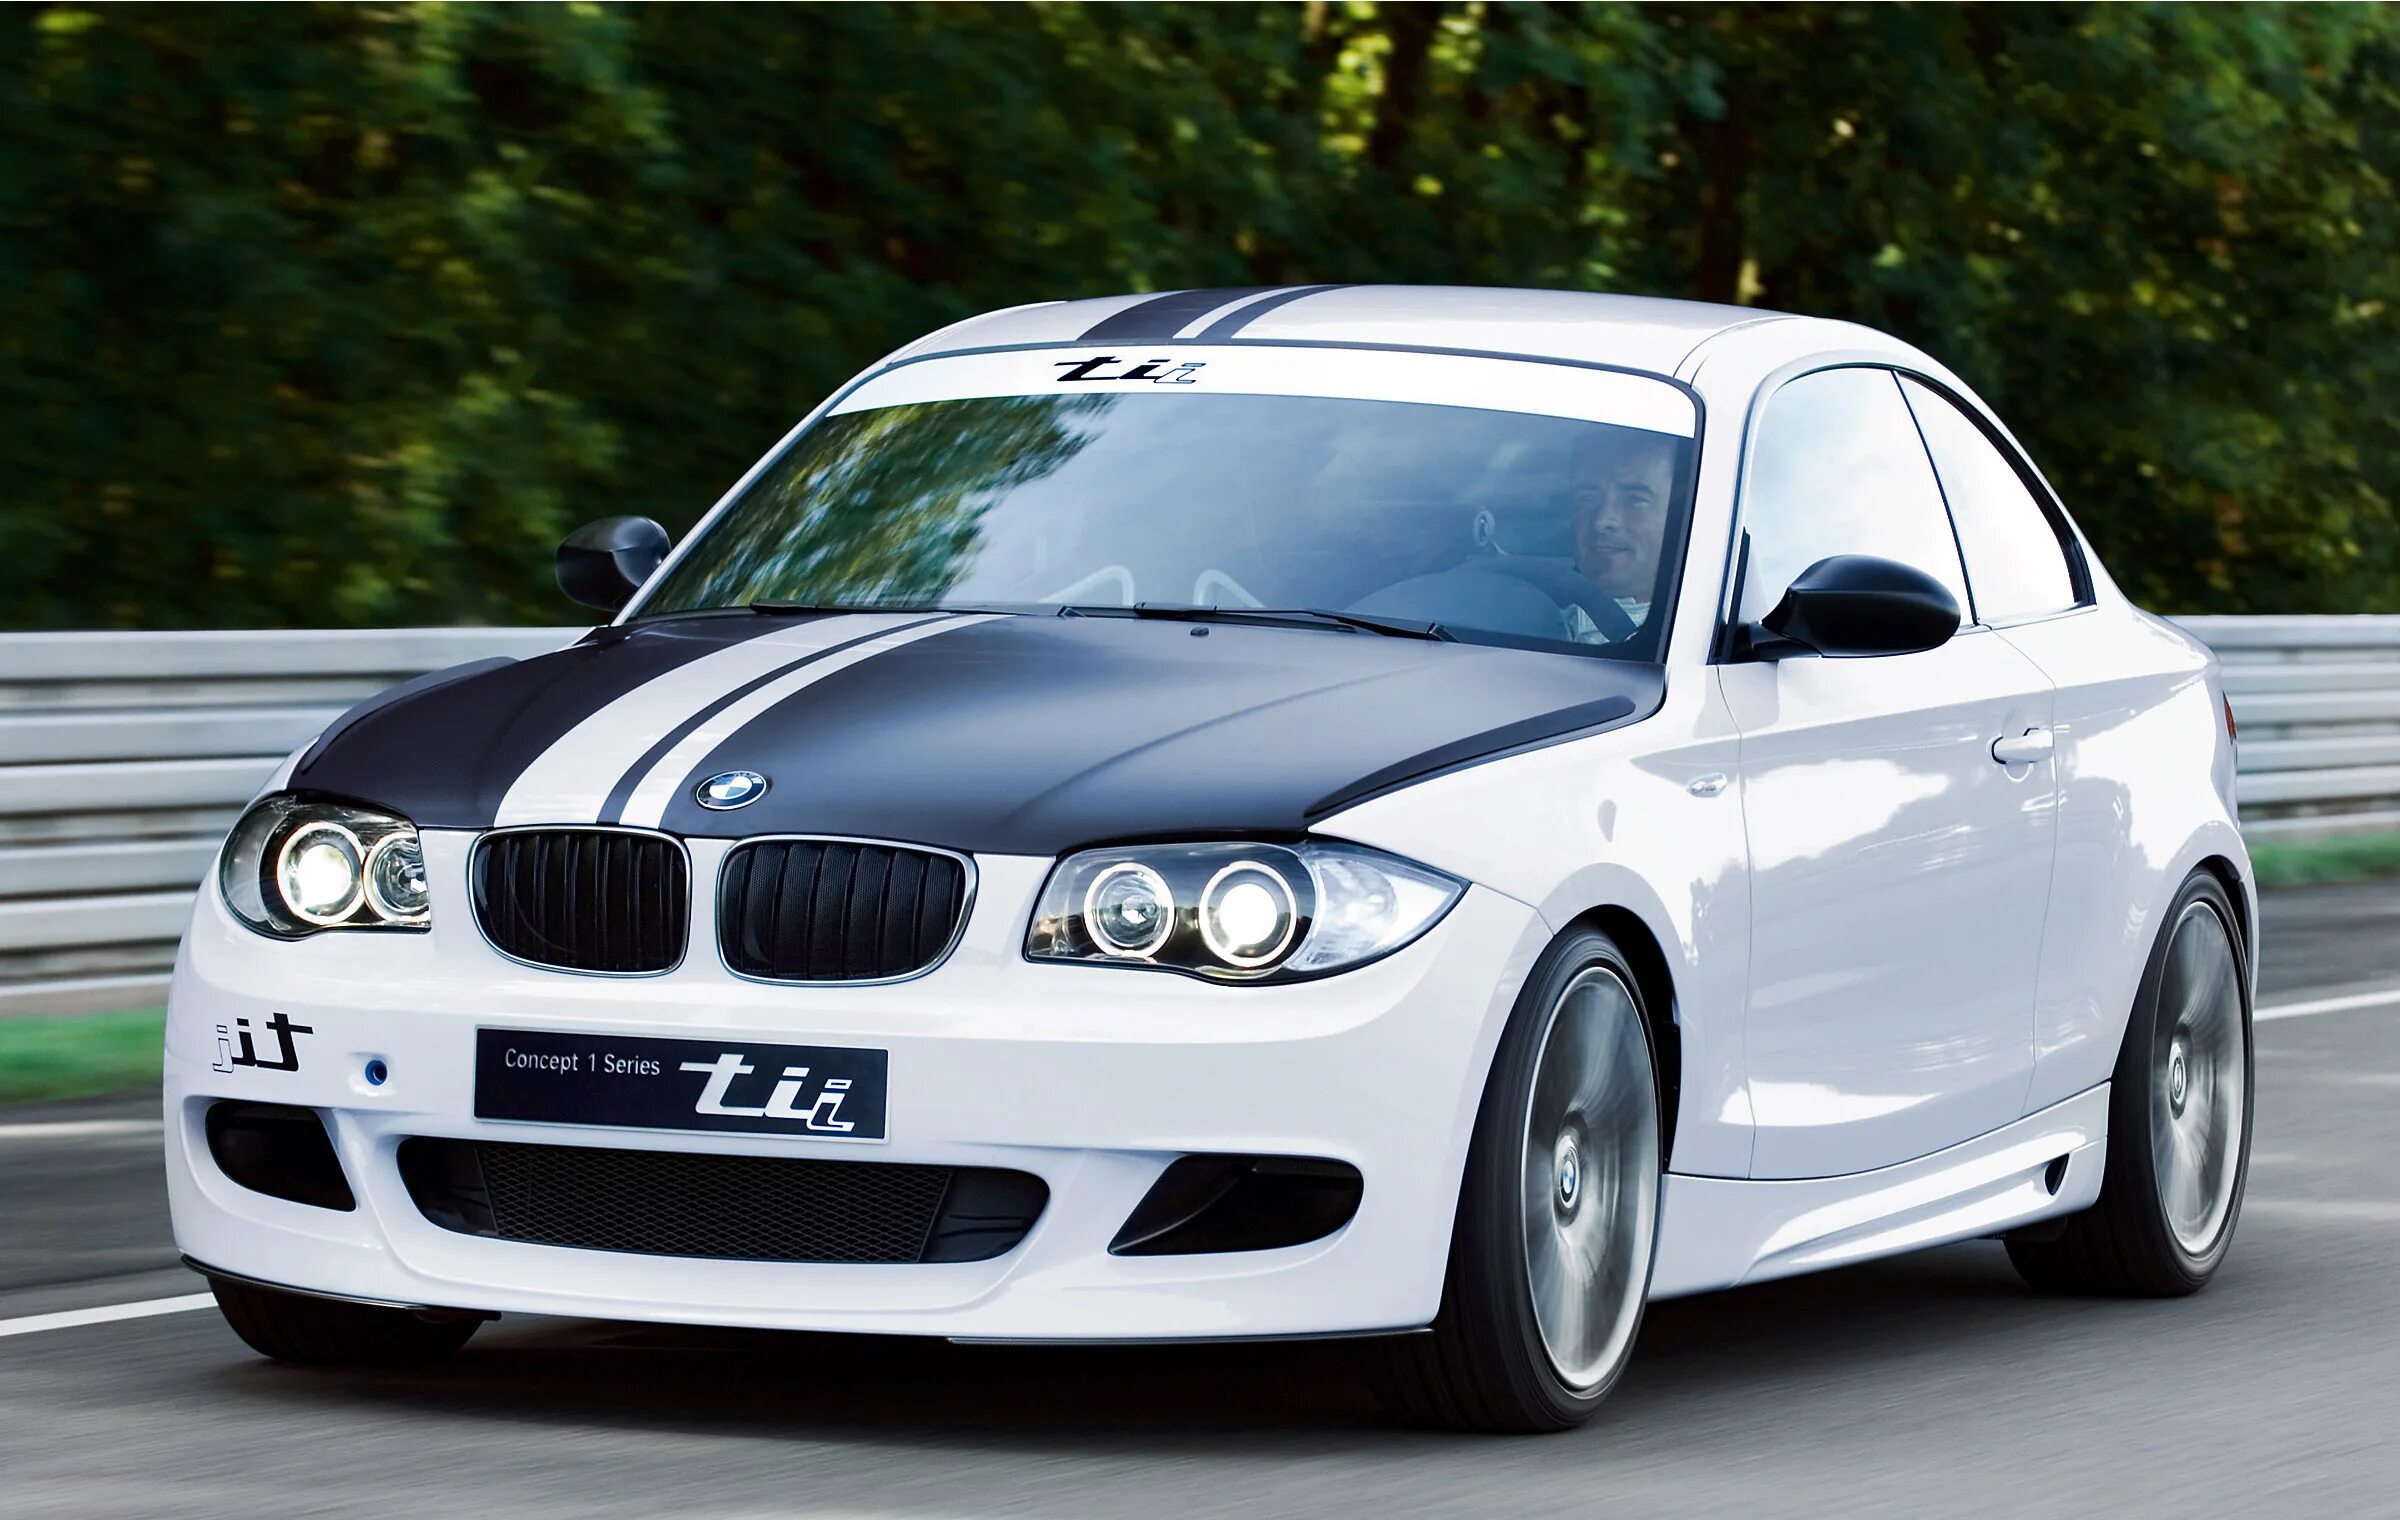 BMW e81. BMW 1 Series. BMW Concept 1 Series tii. BMW 1 Series tii. Cars bmw ru